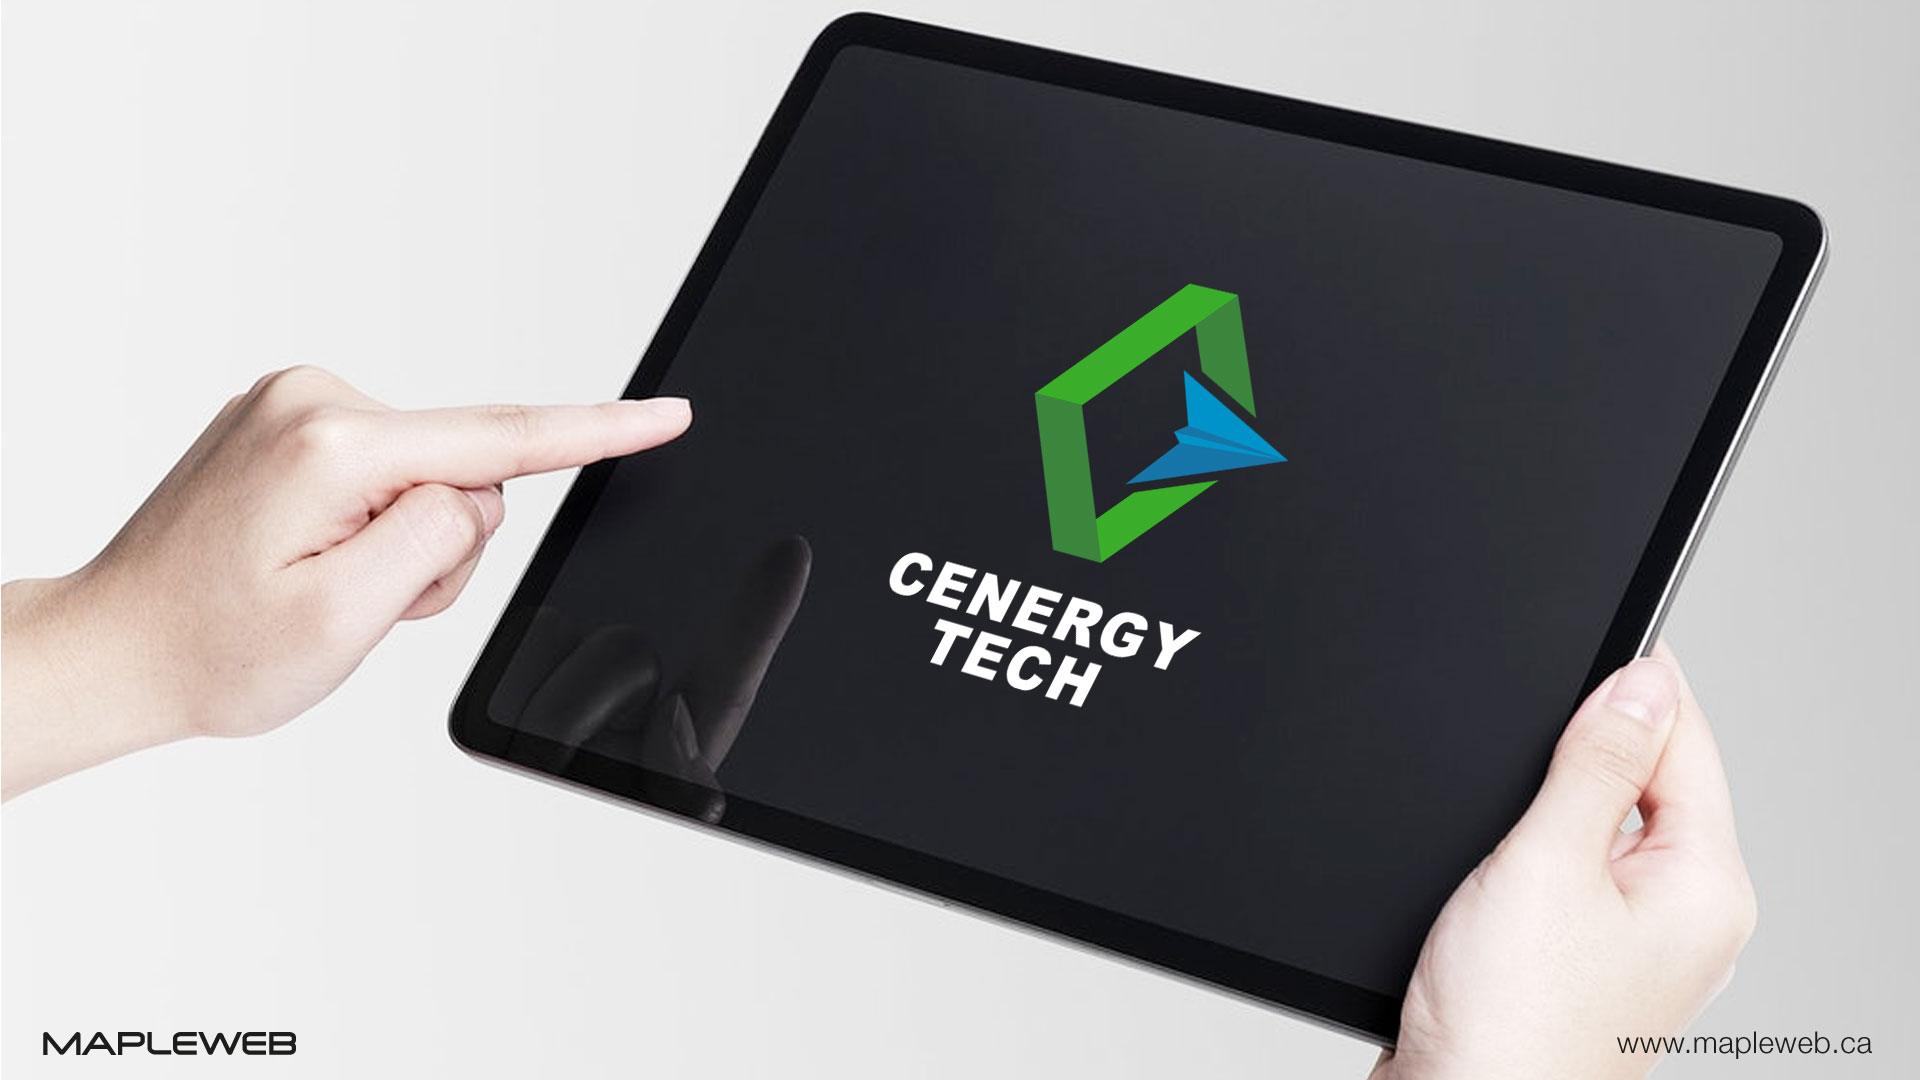 cenergy-tech-brand-logo-design-by-mapleweb-vancouver-canada-tablet-mock